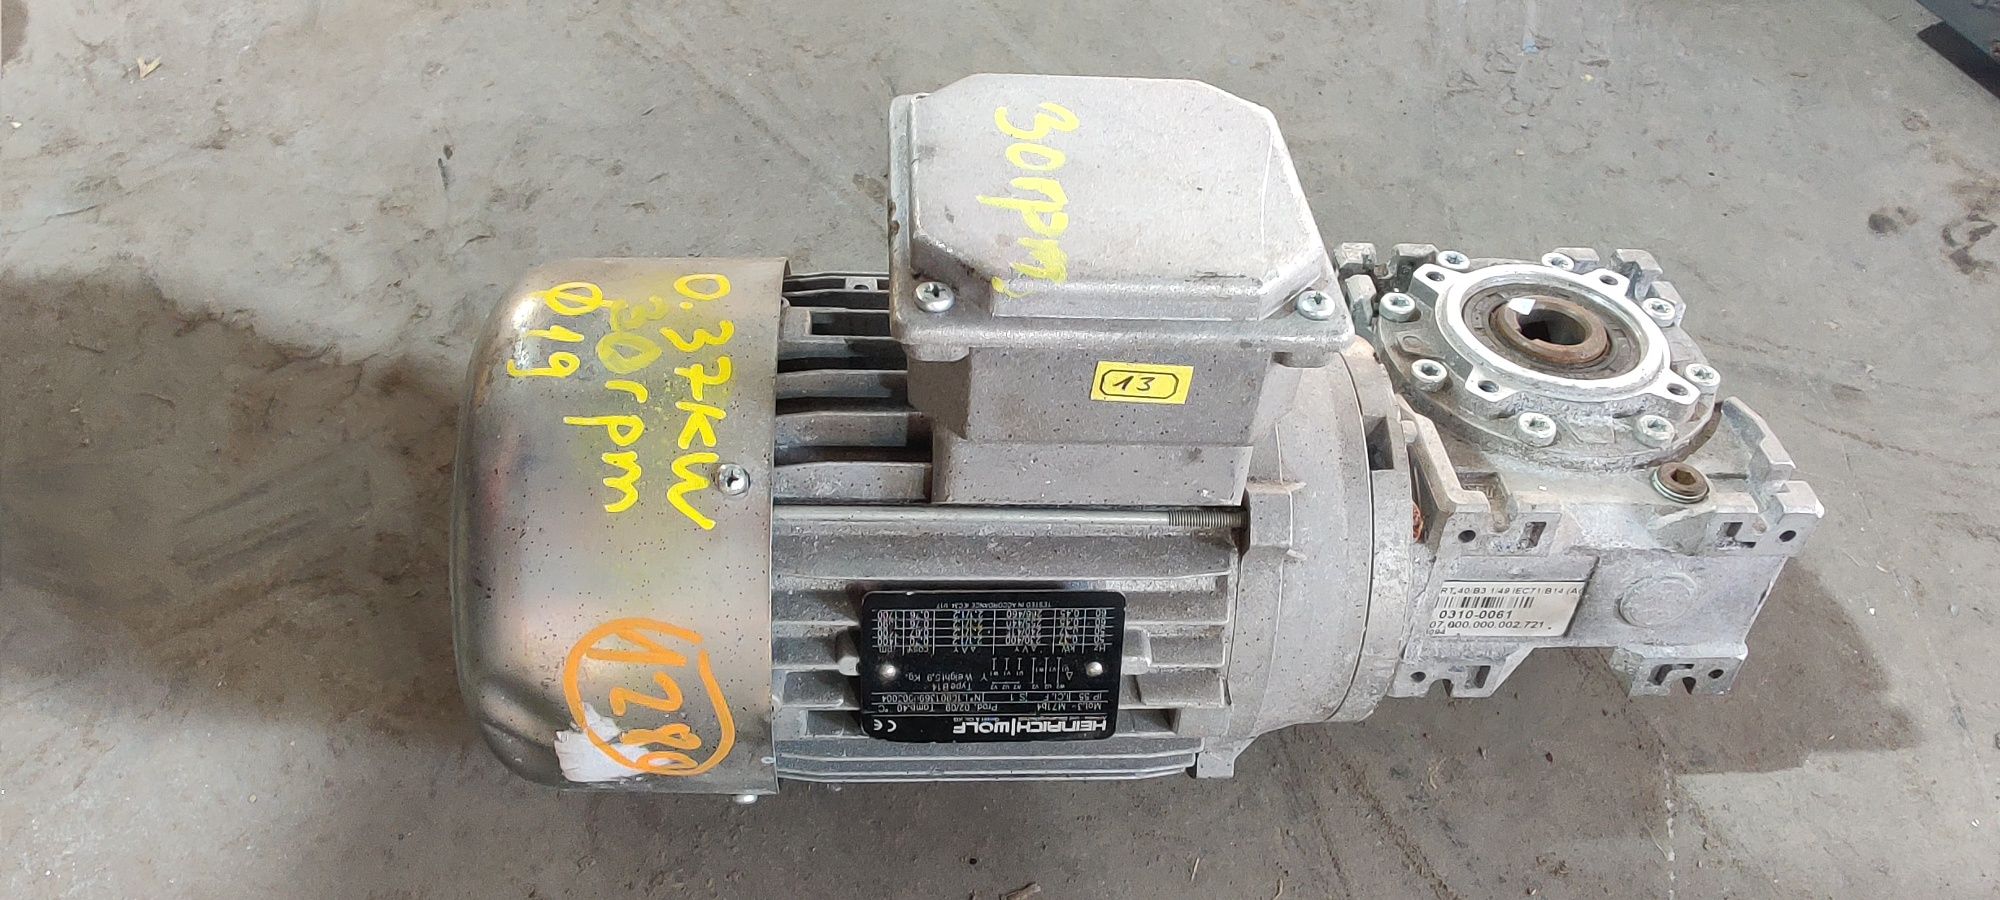 Motor electric trifazat cu reductor, 0.37kW, 30rpm, 380V